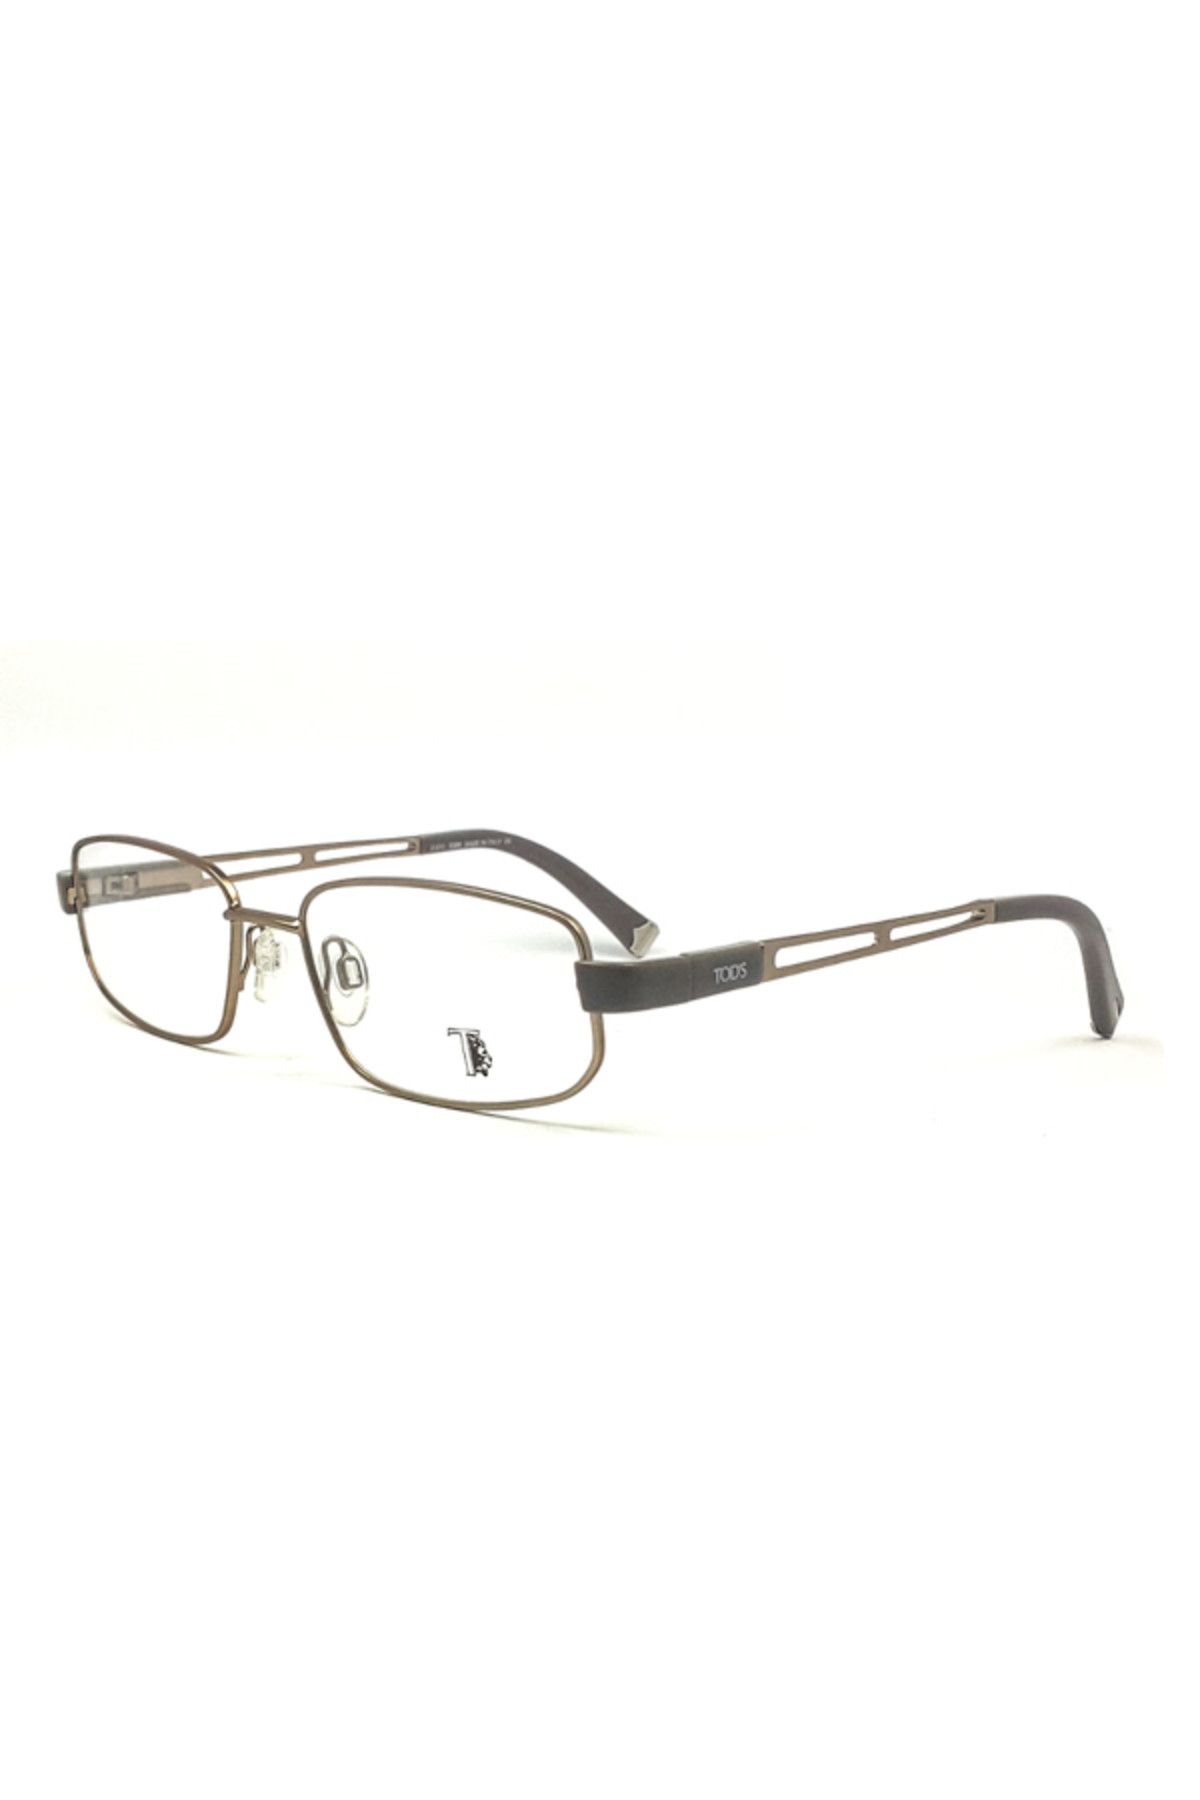 TOD'S Unisex İmaj Gözlüğü TO 5008 035